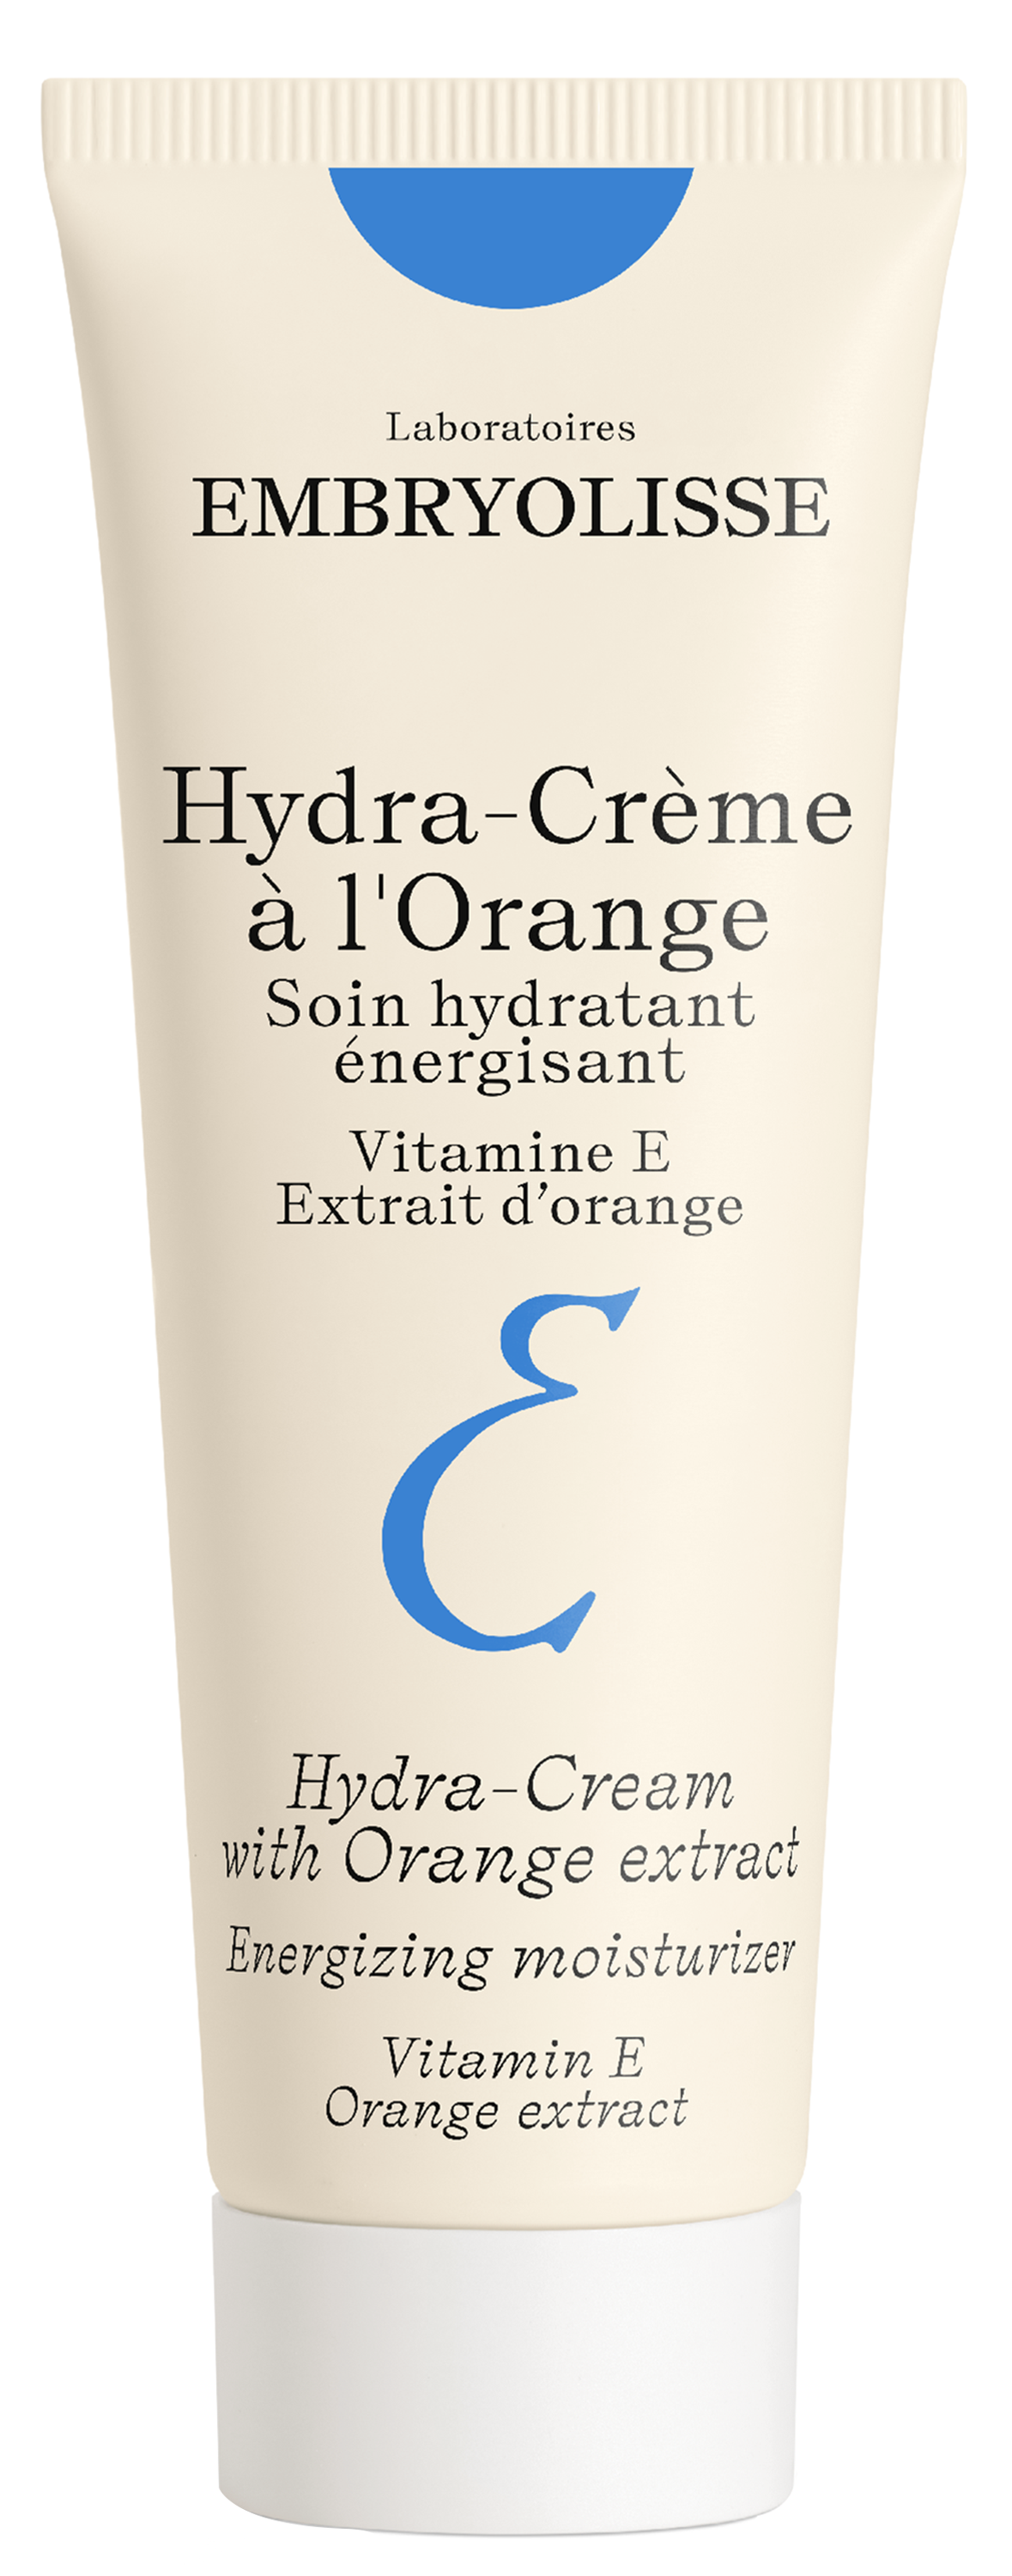 Embryolisse Hydra-Cream with Orange Extract, 1.69 fl oz - image 1 of 6